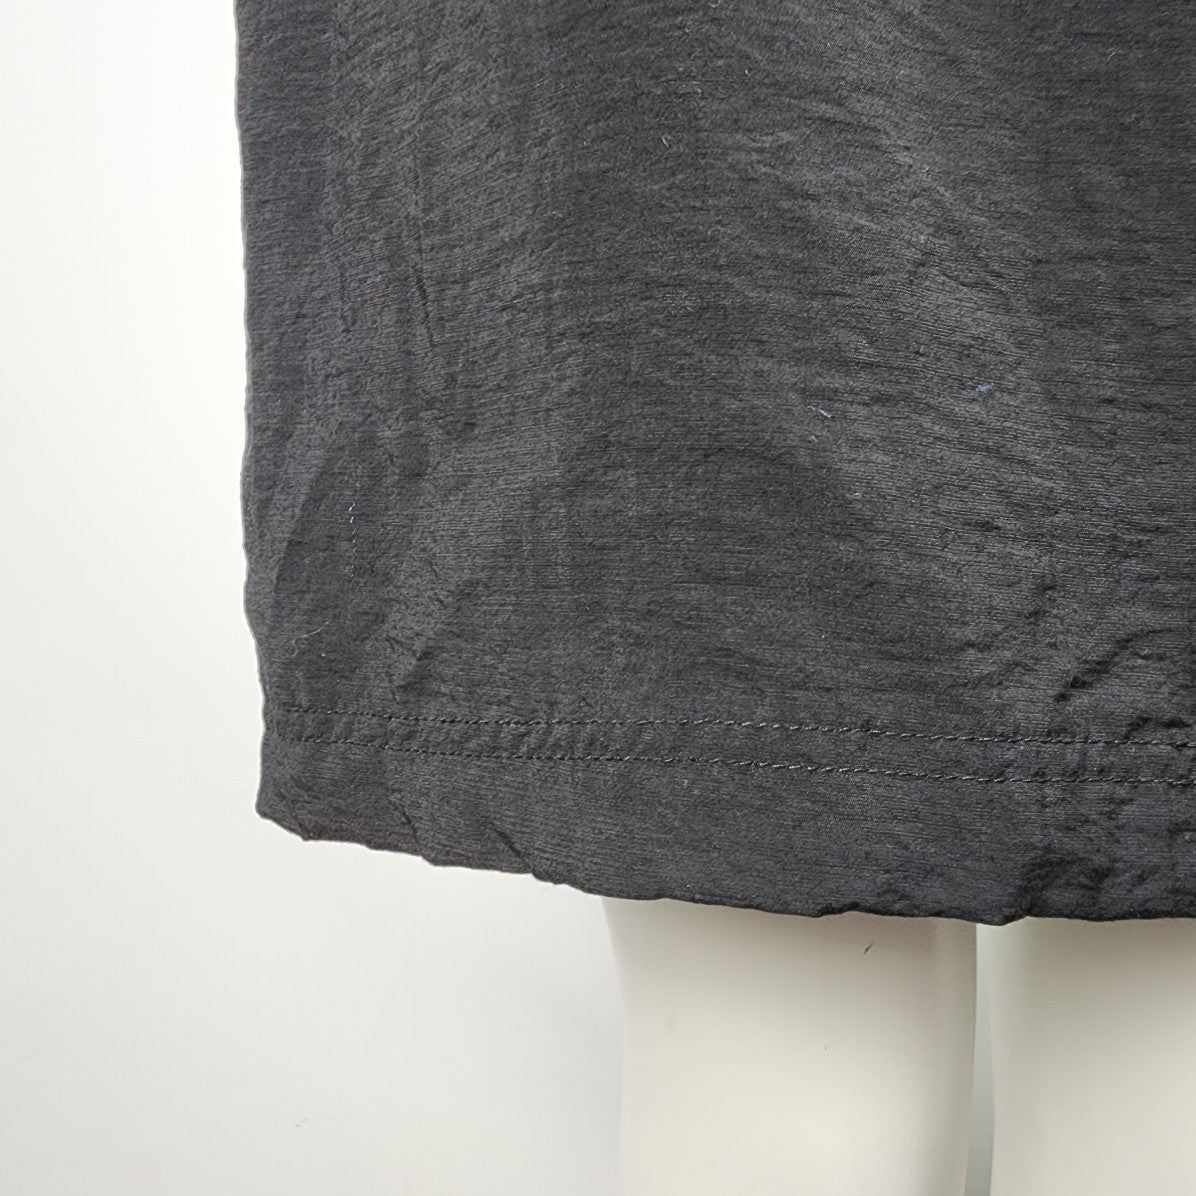 Adrienne Vittadini Black Sheath Dress Size 10